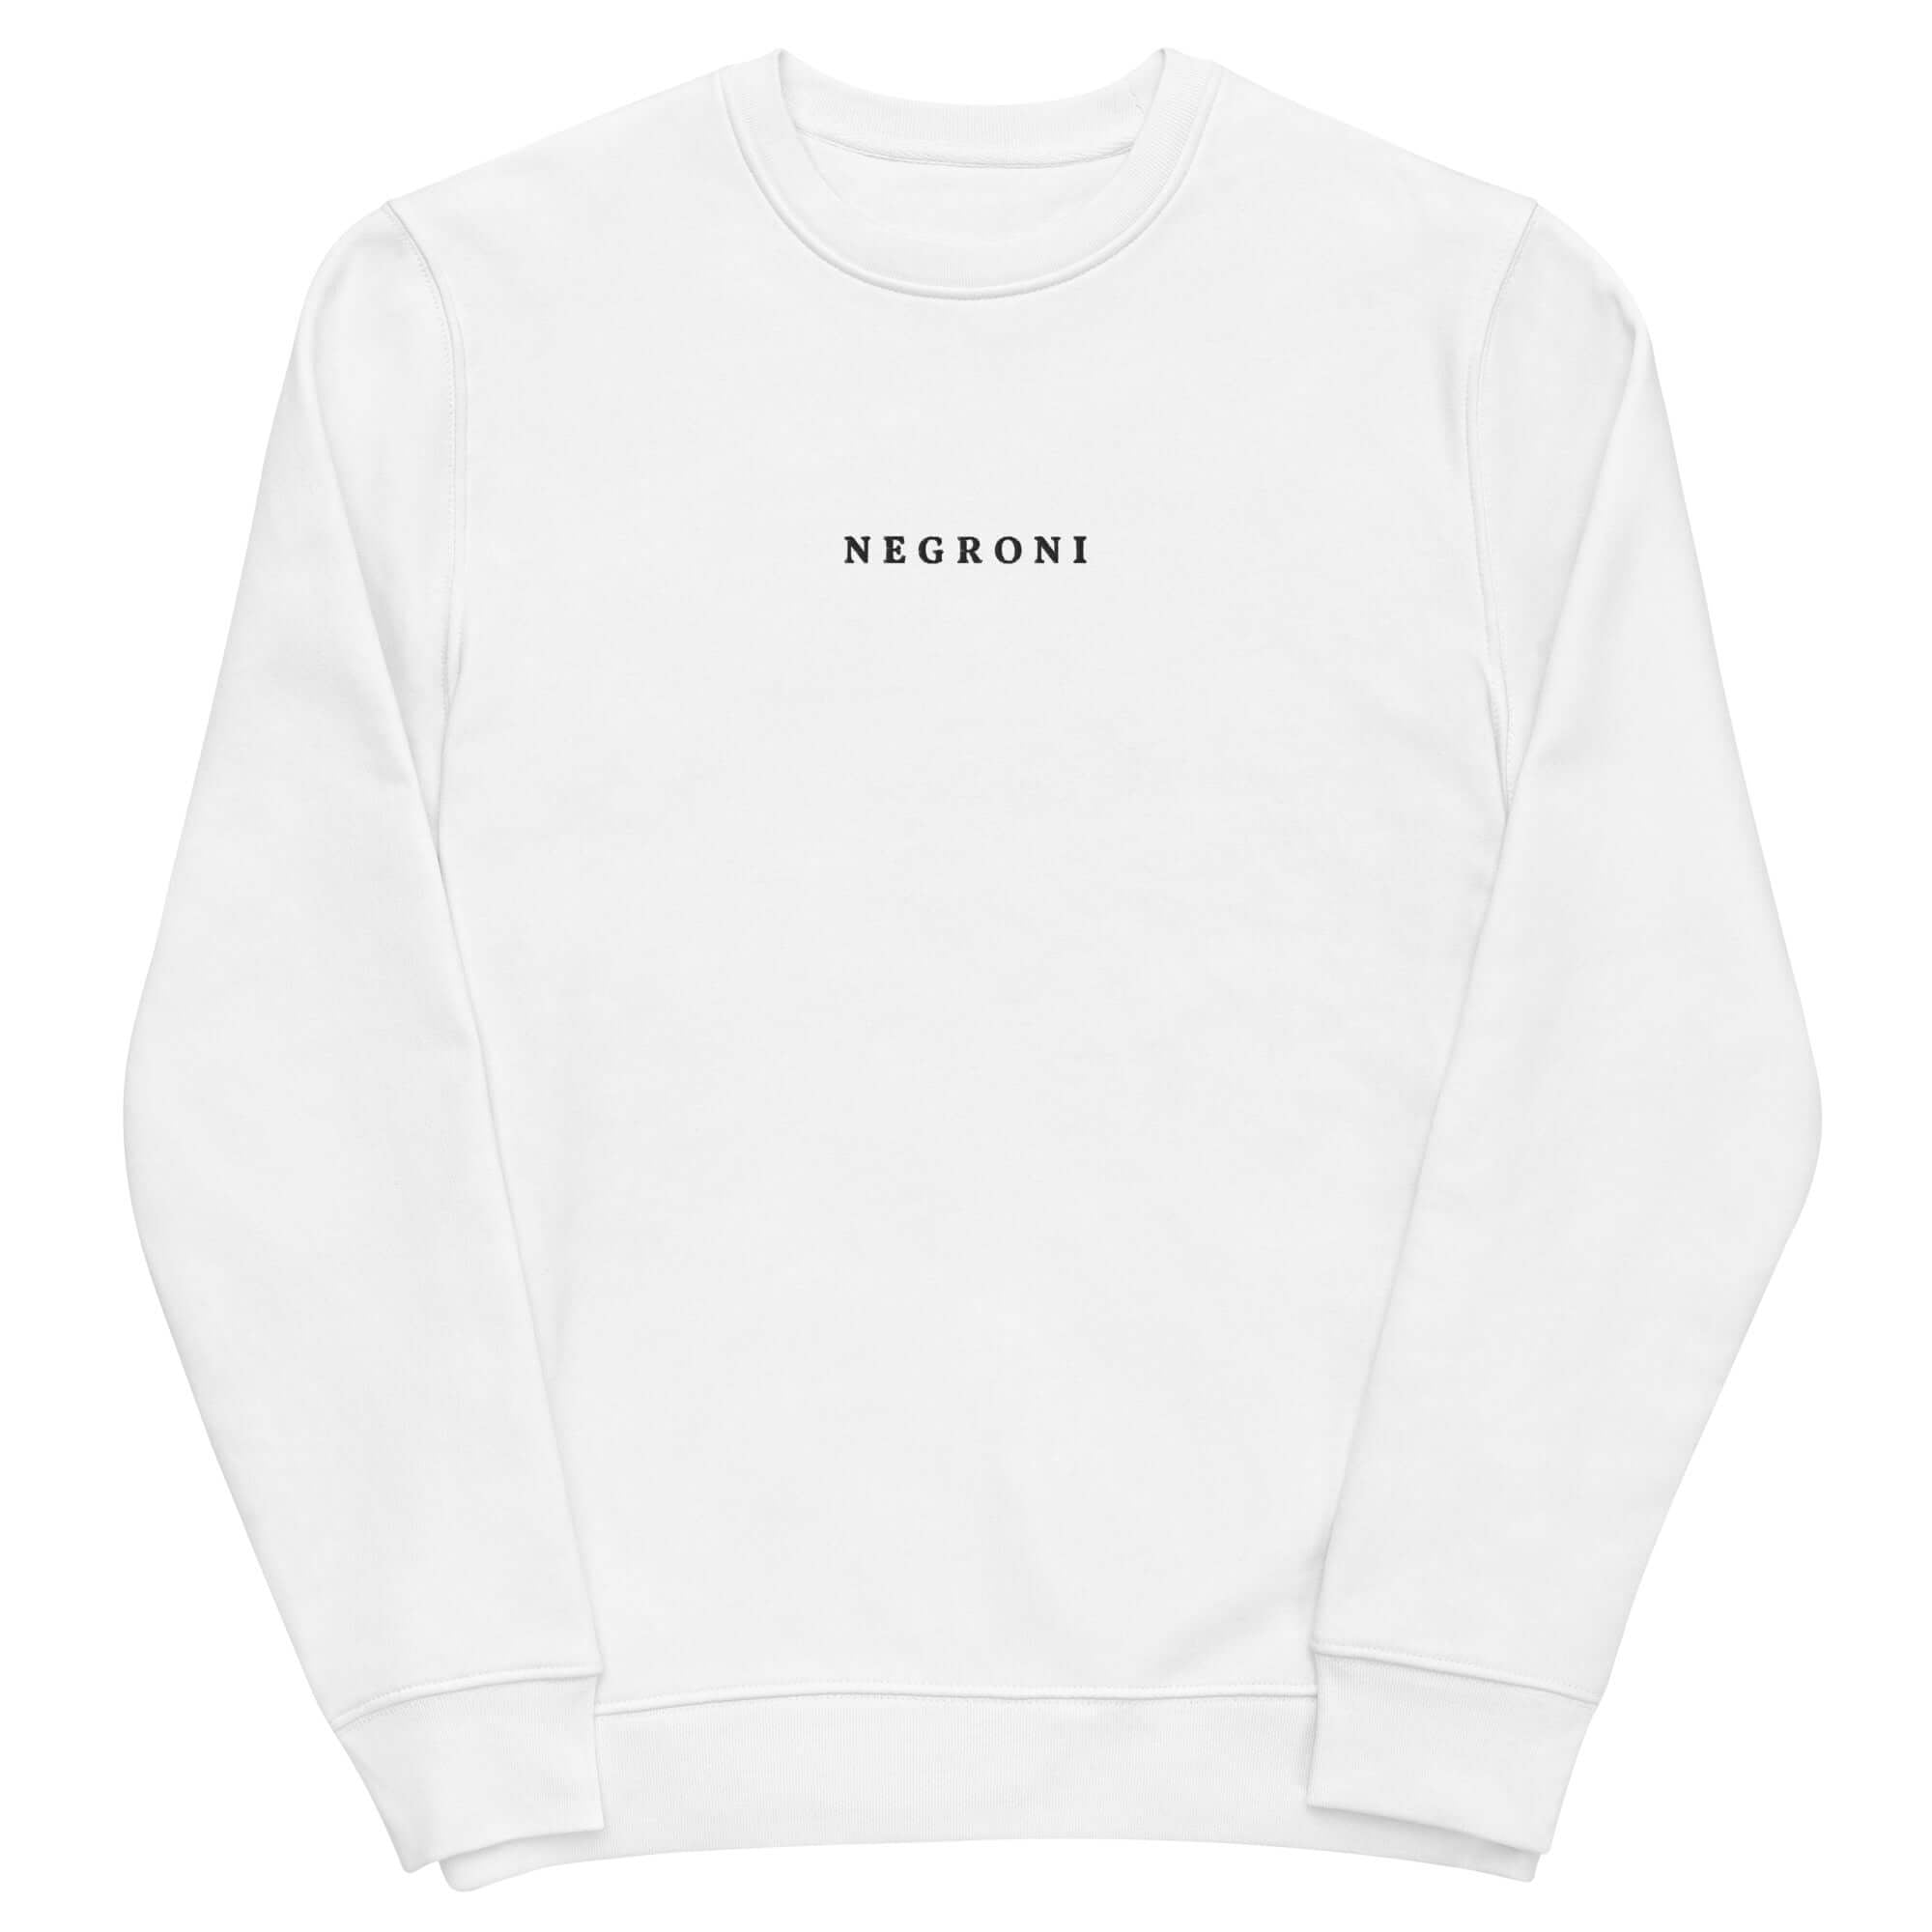 Negroni - Organic Embroidered Sweatshirt - The Refined Spirit